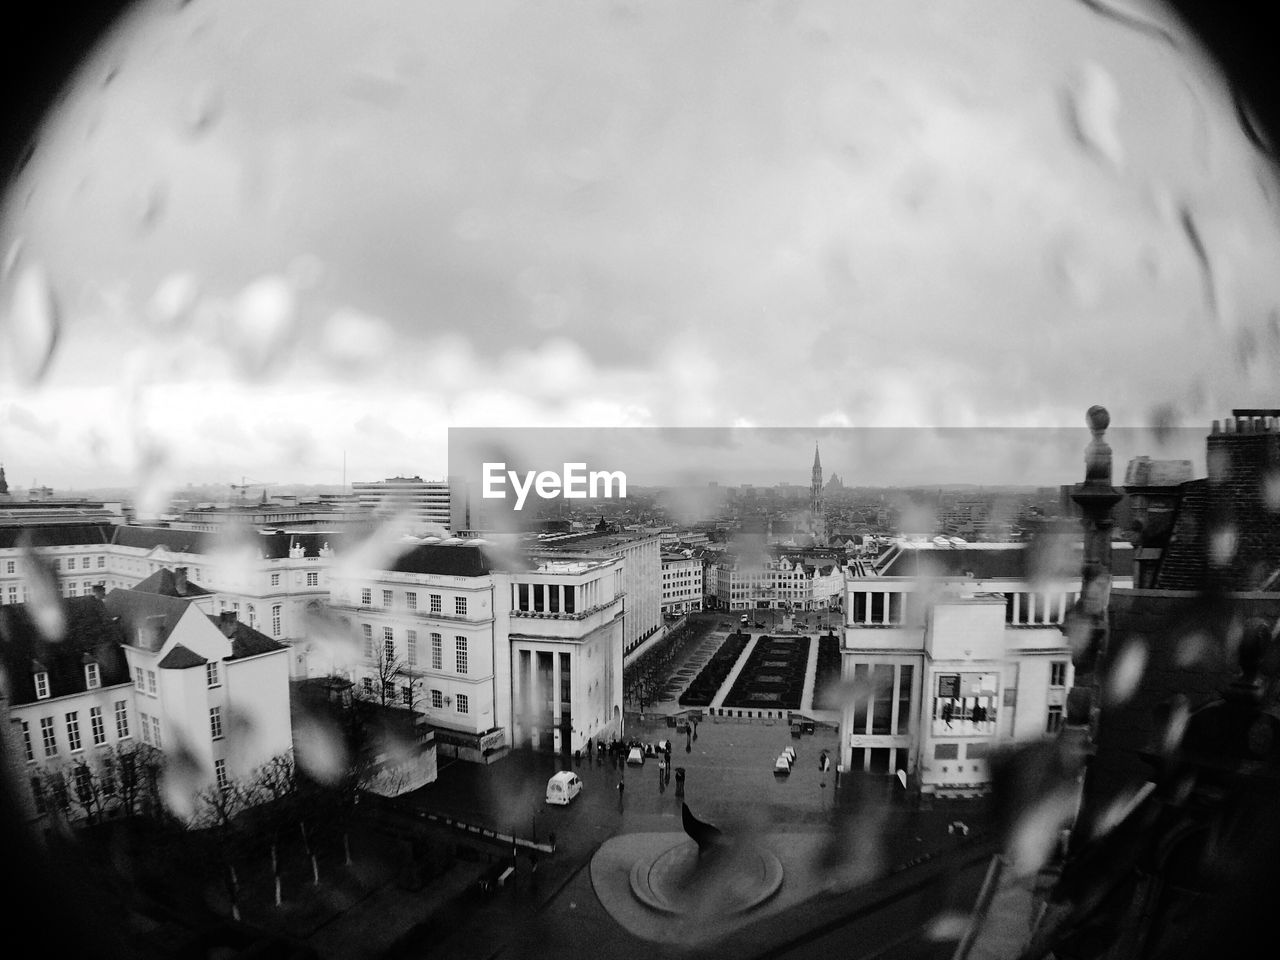 City viewed through wet window glass